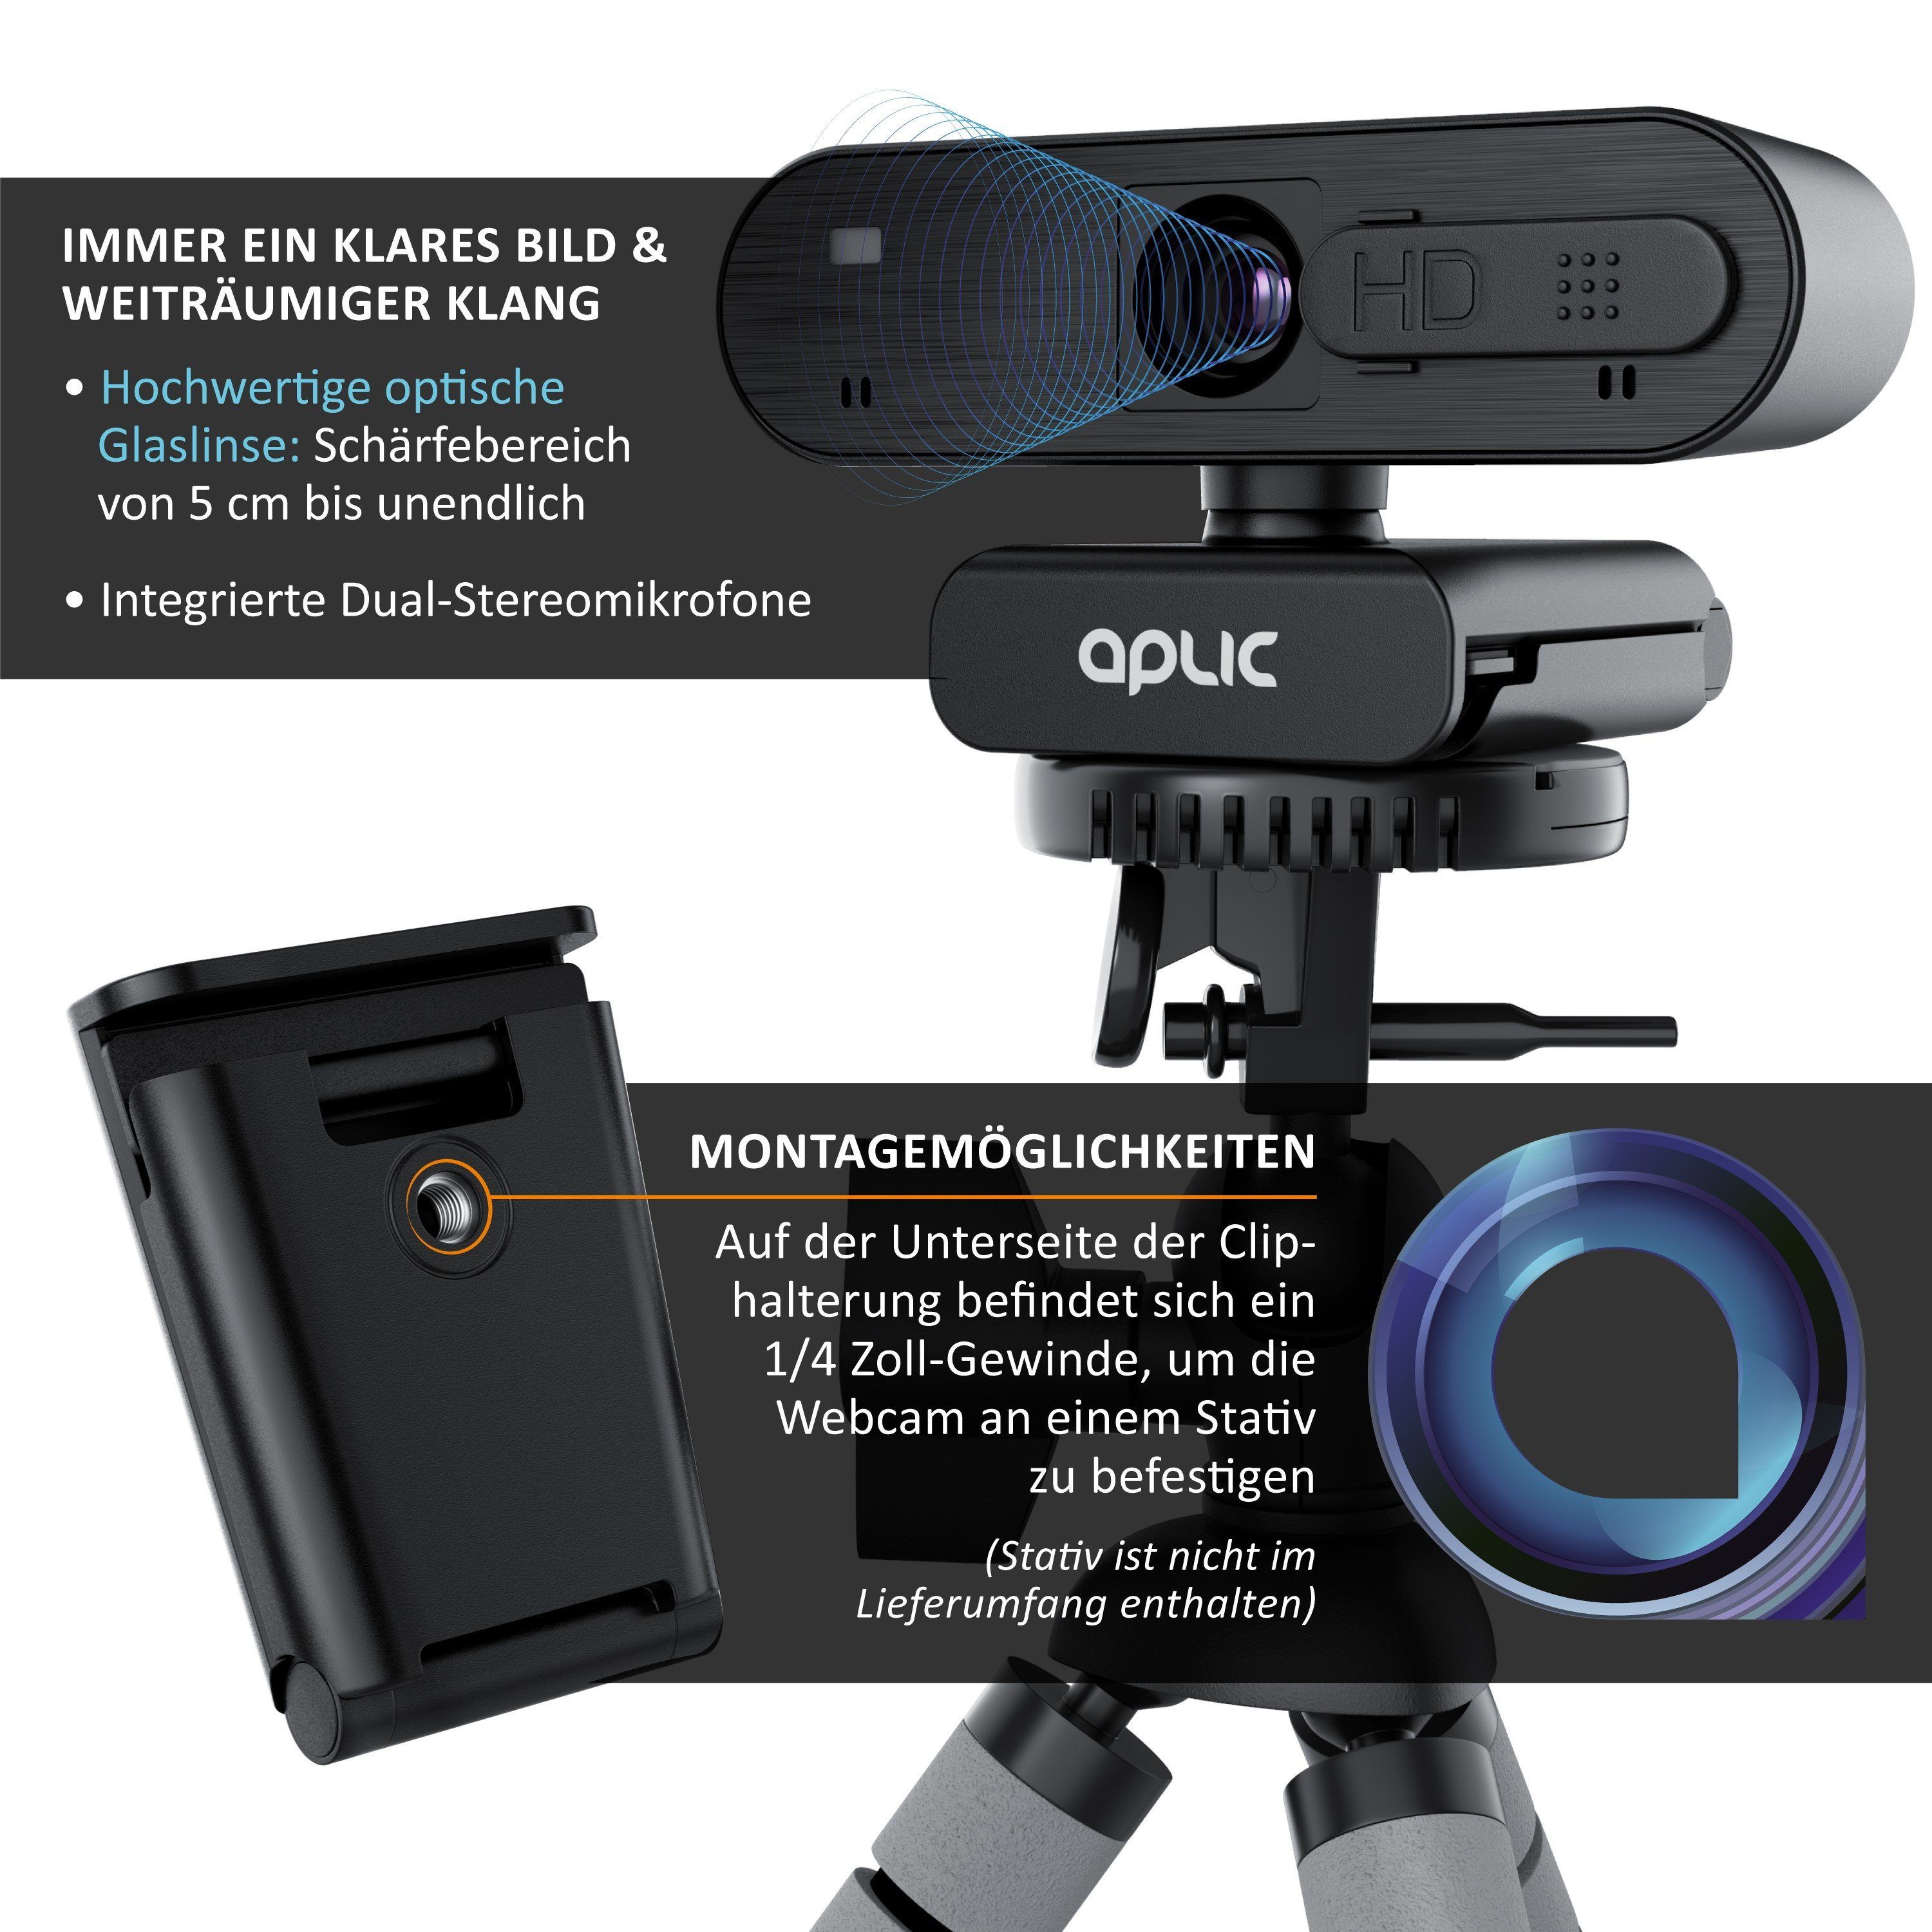 Aplic Full HD-Webcam Stereomikrofon) Autofokus, Sichtschutz, 1920x1080@30Hz, Shutter schwarz1 HD, Privacy (Full